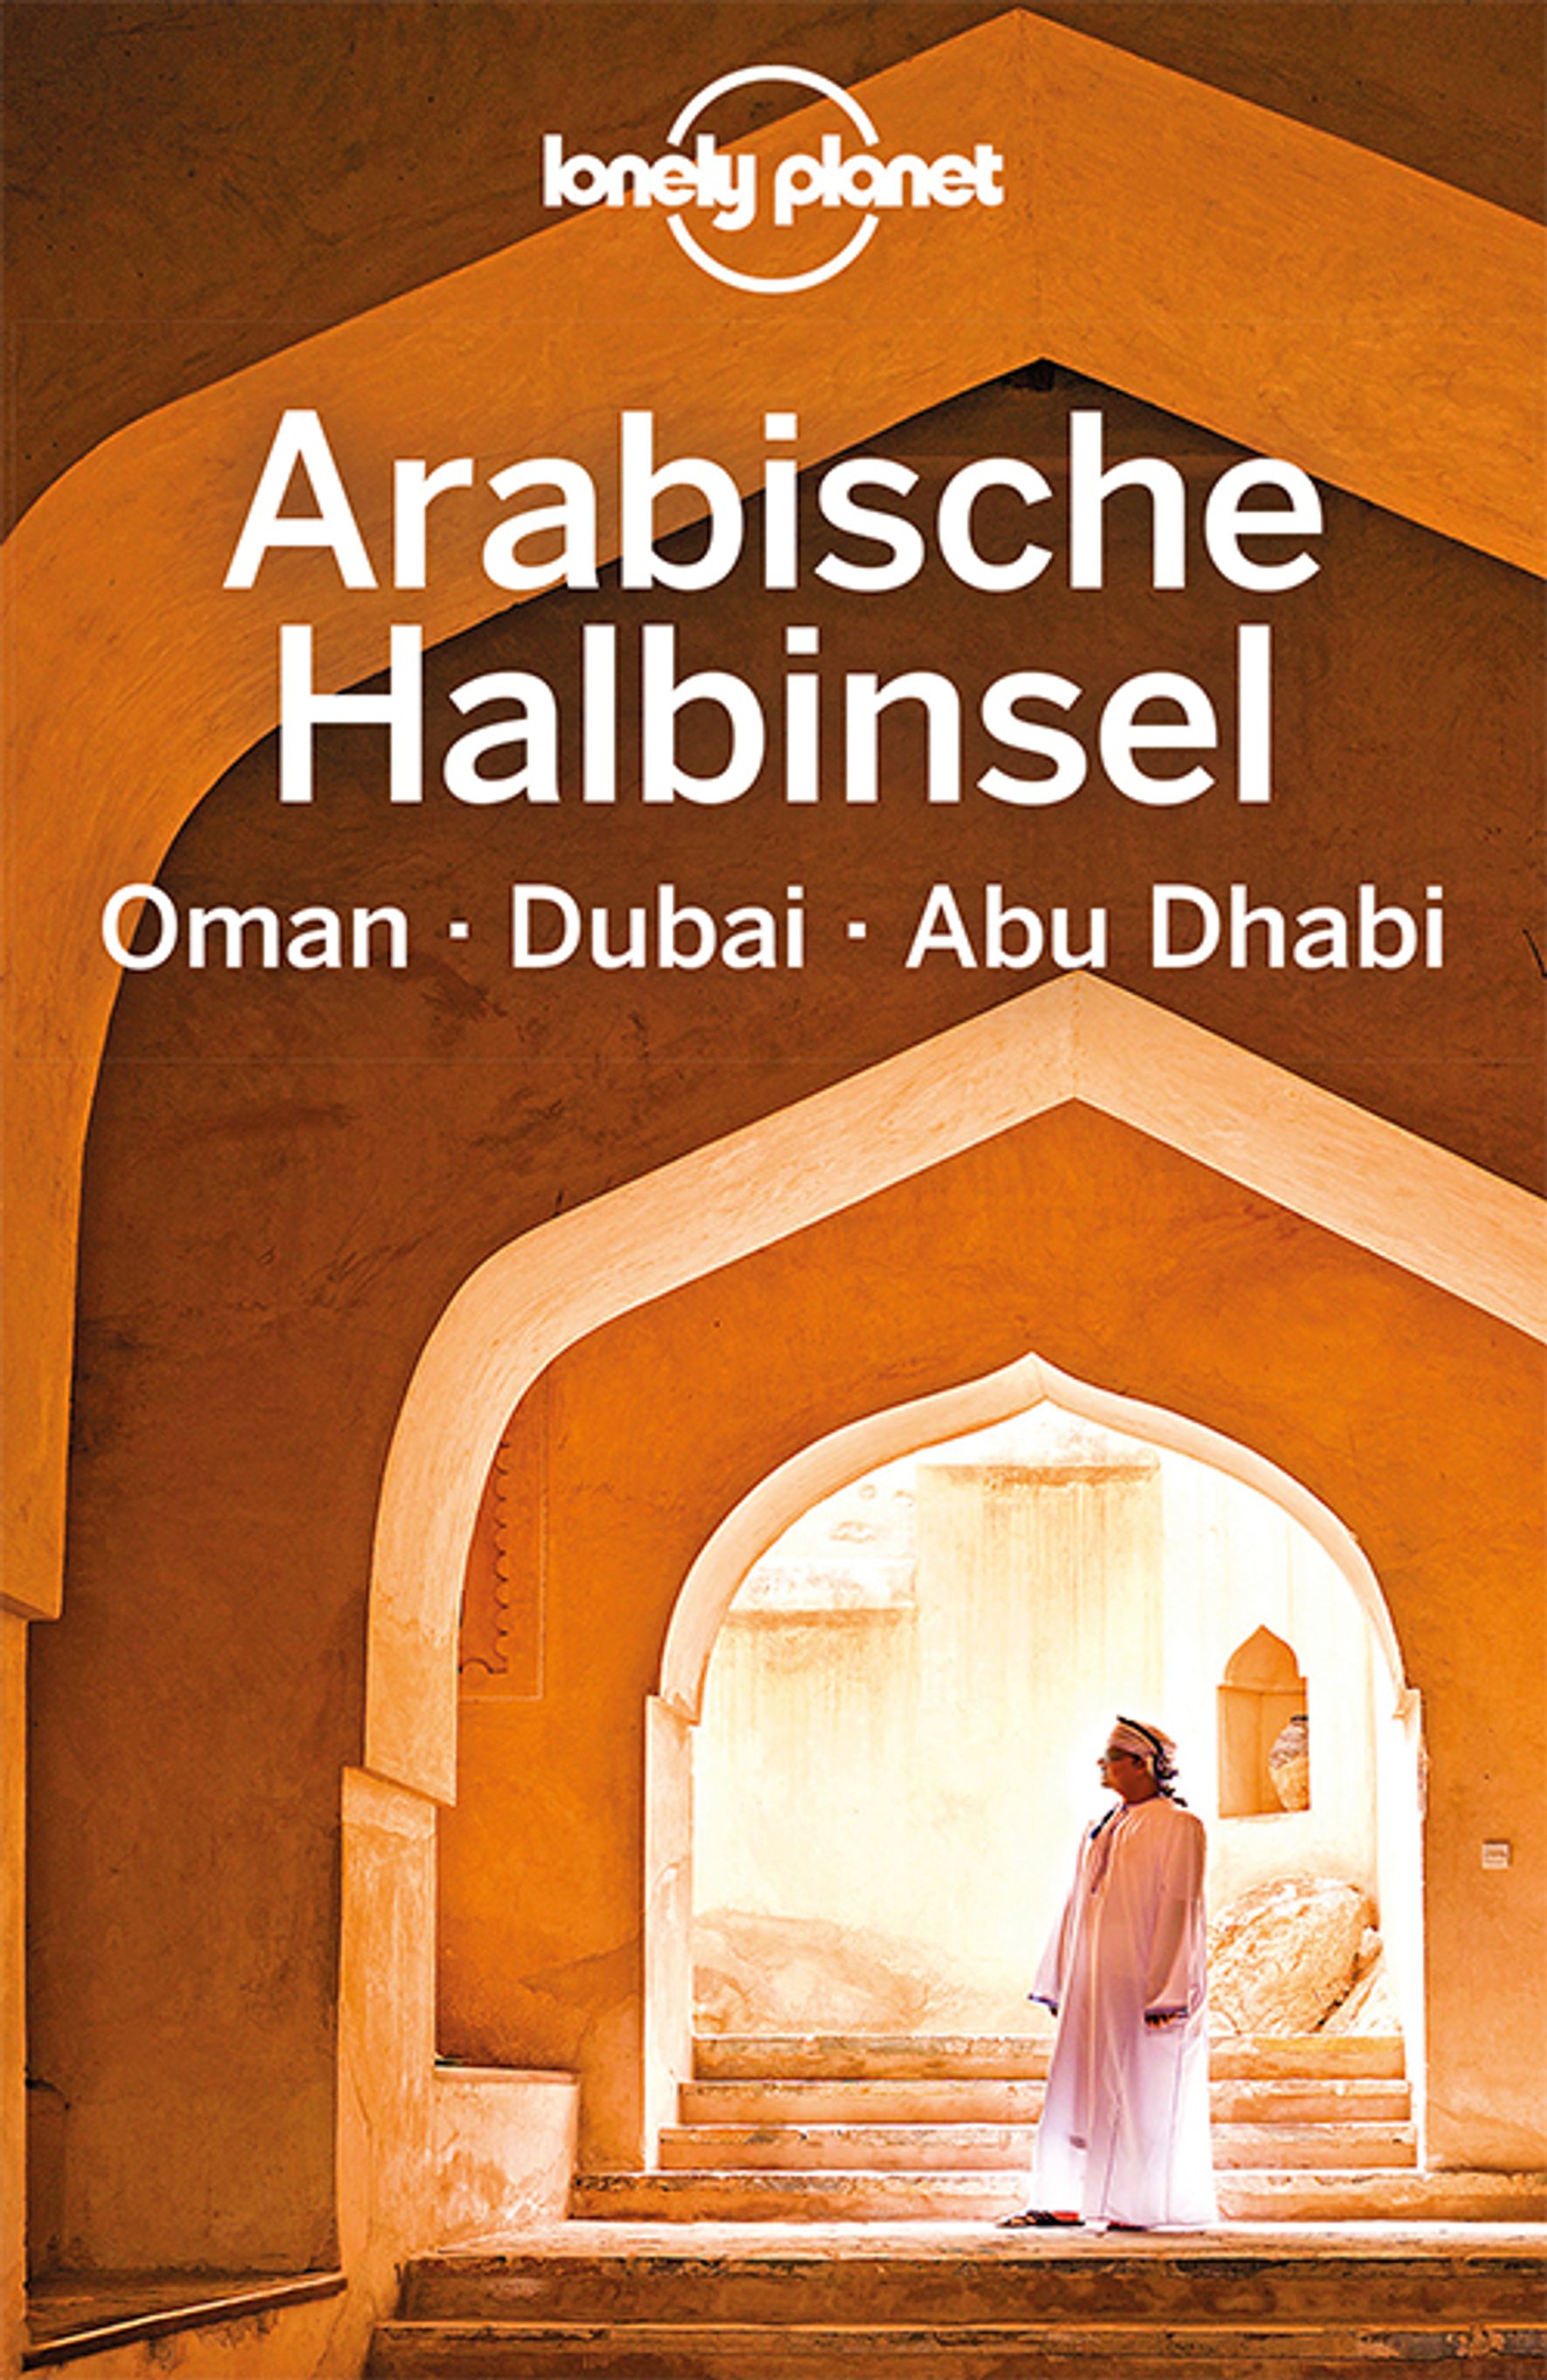 Lonely Planet Arabische Halbinsel, Oman, Dubai, Abu Dhabi